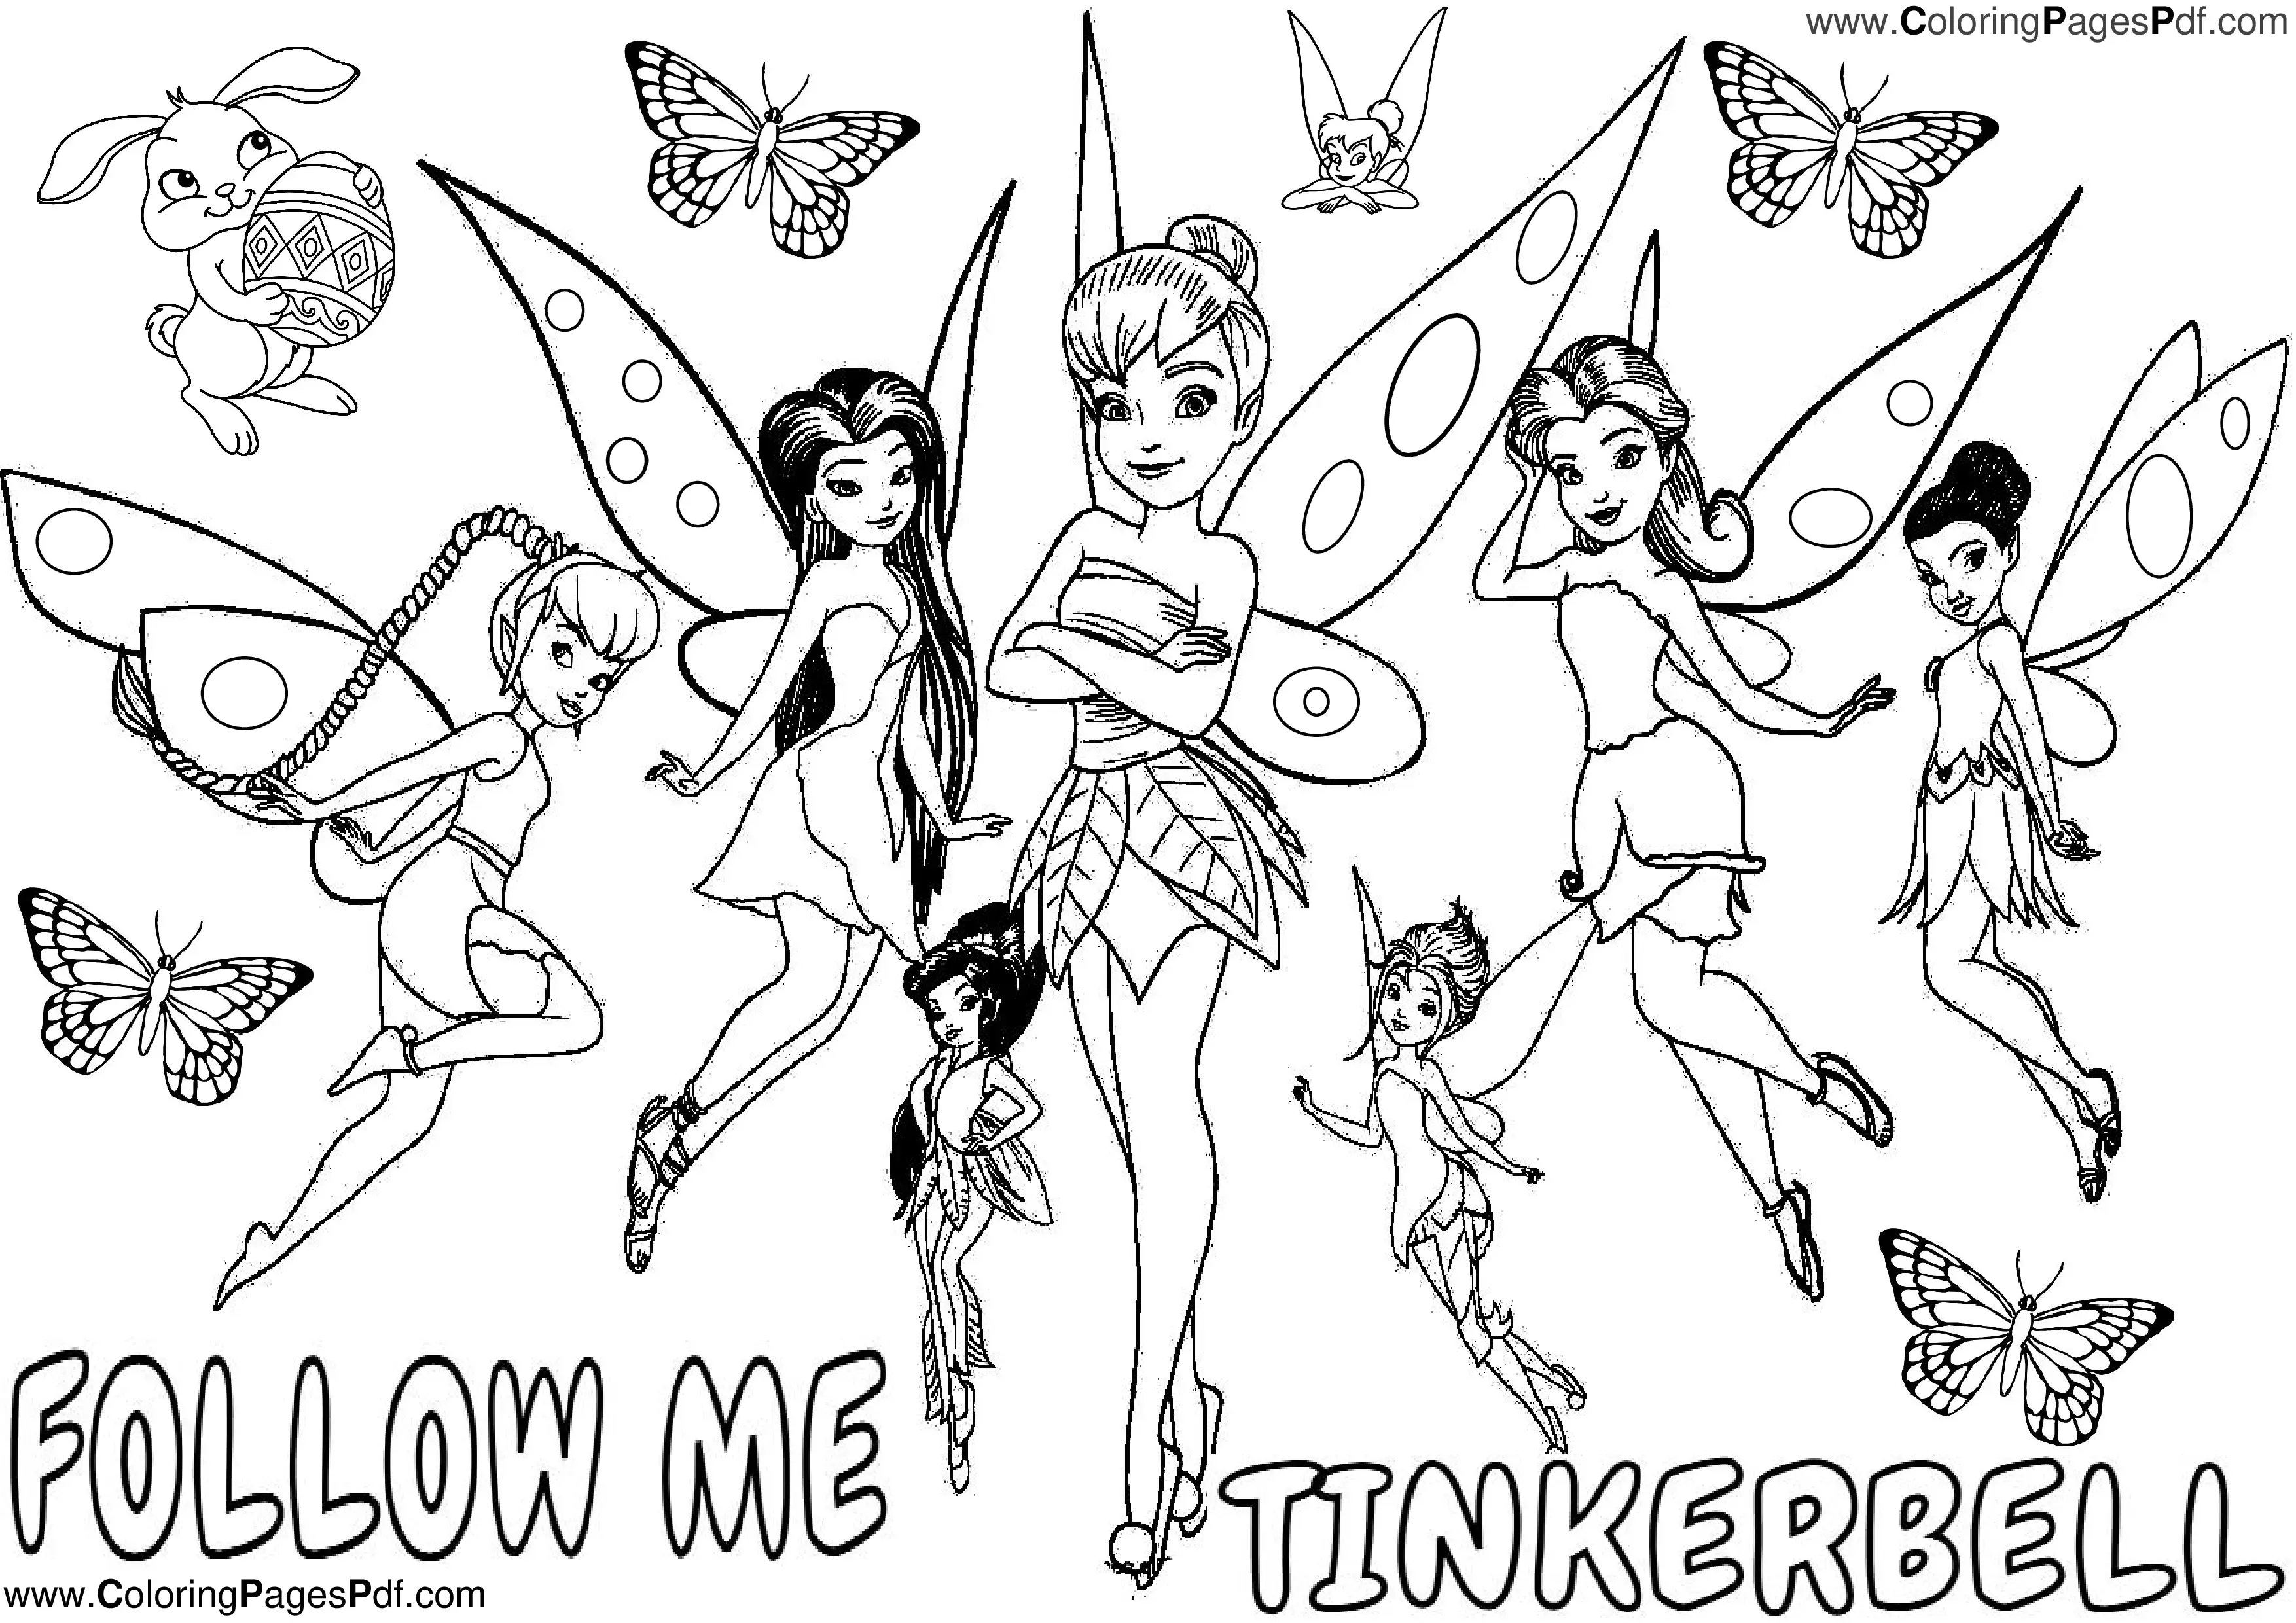 Disney tinkerbell coloring book pdf